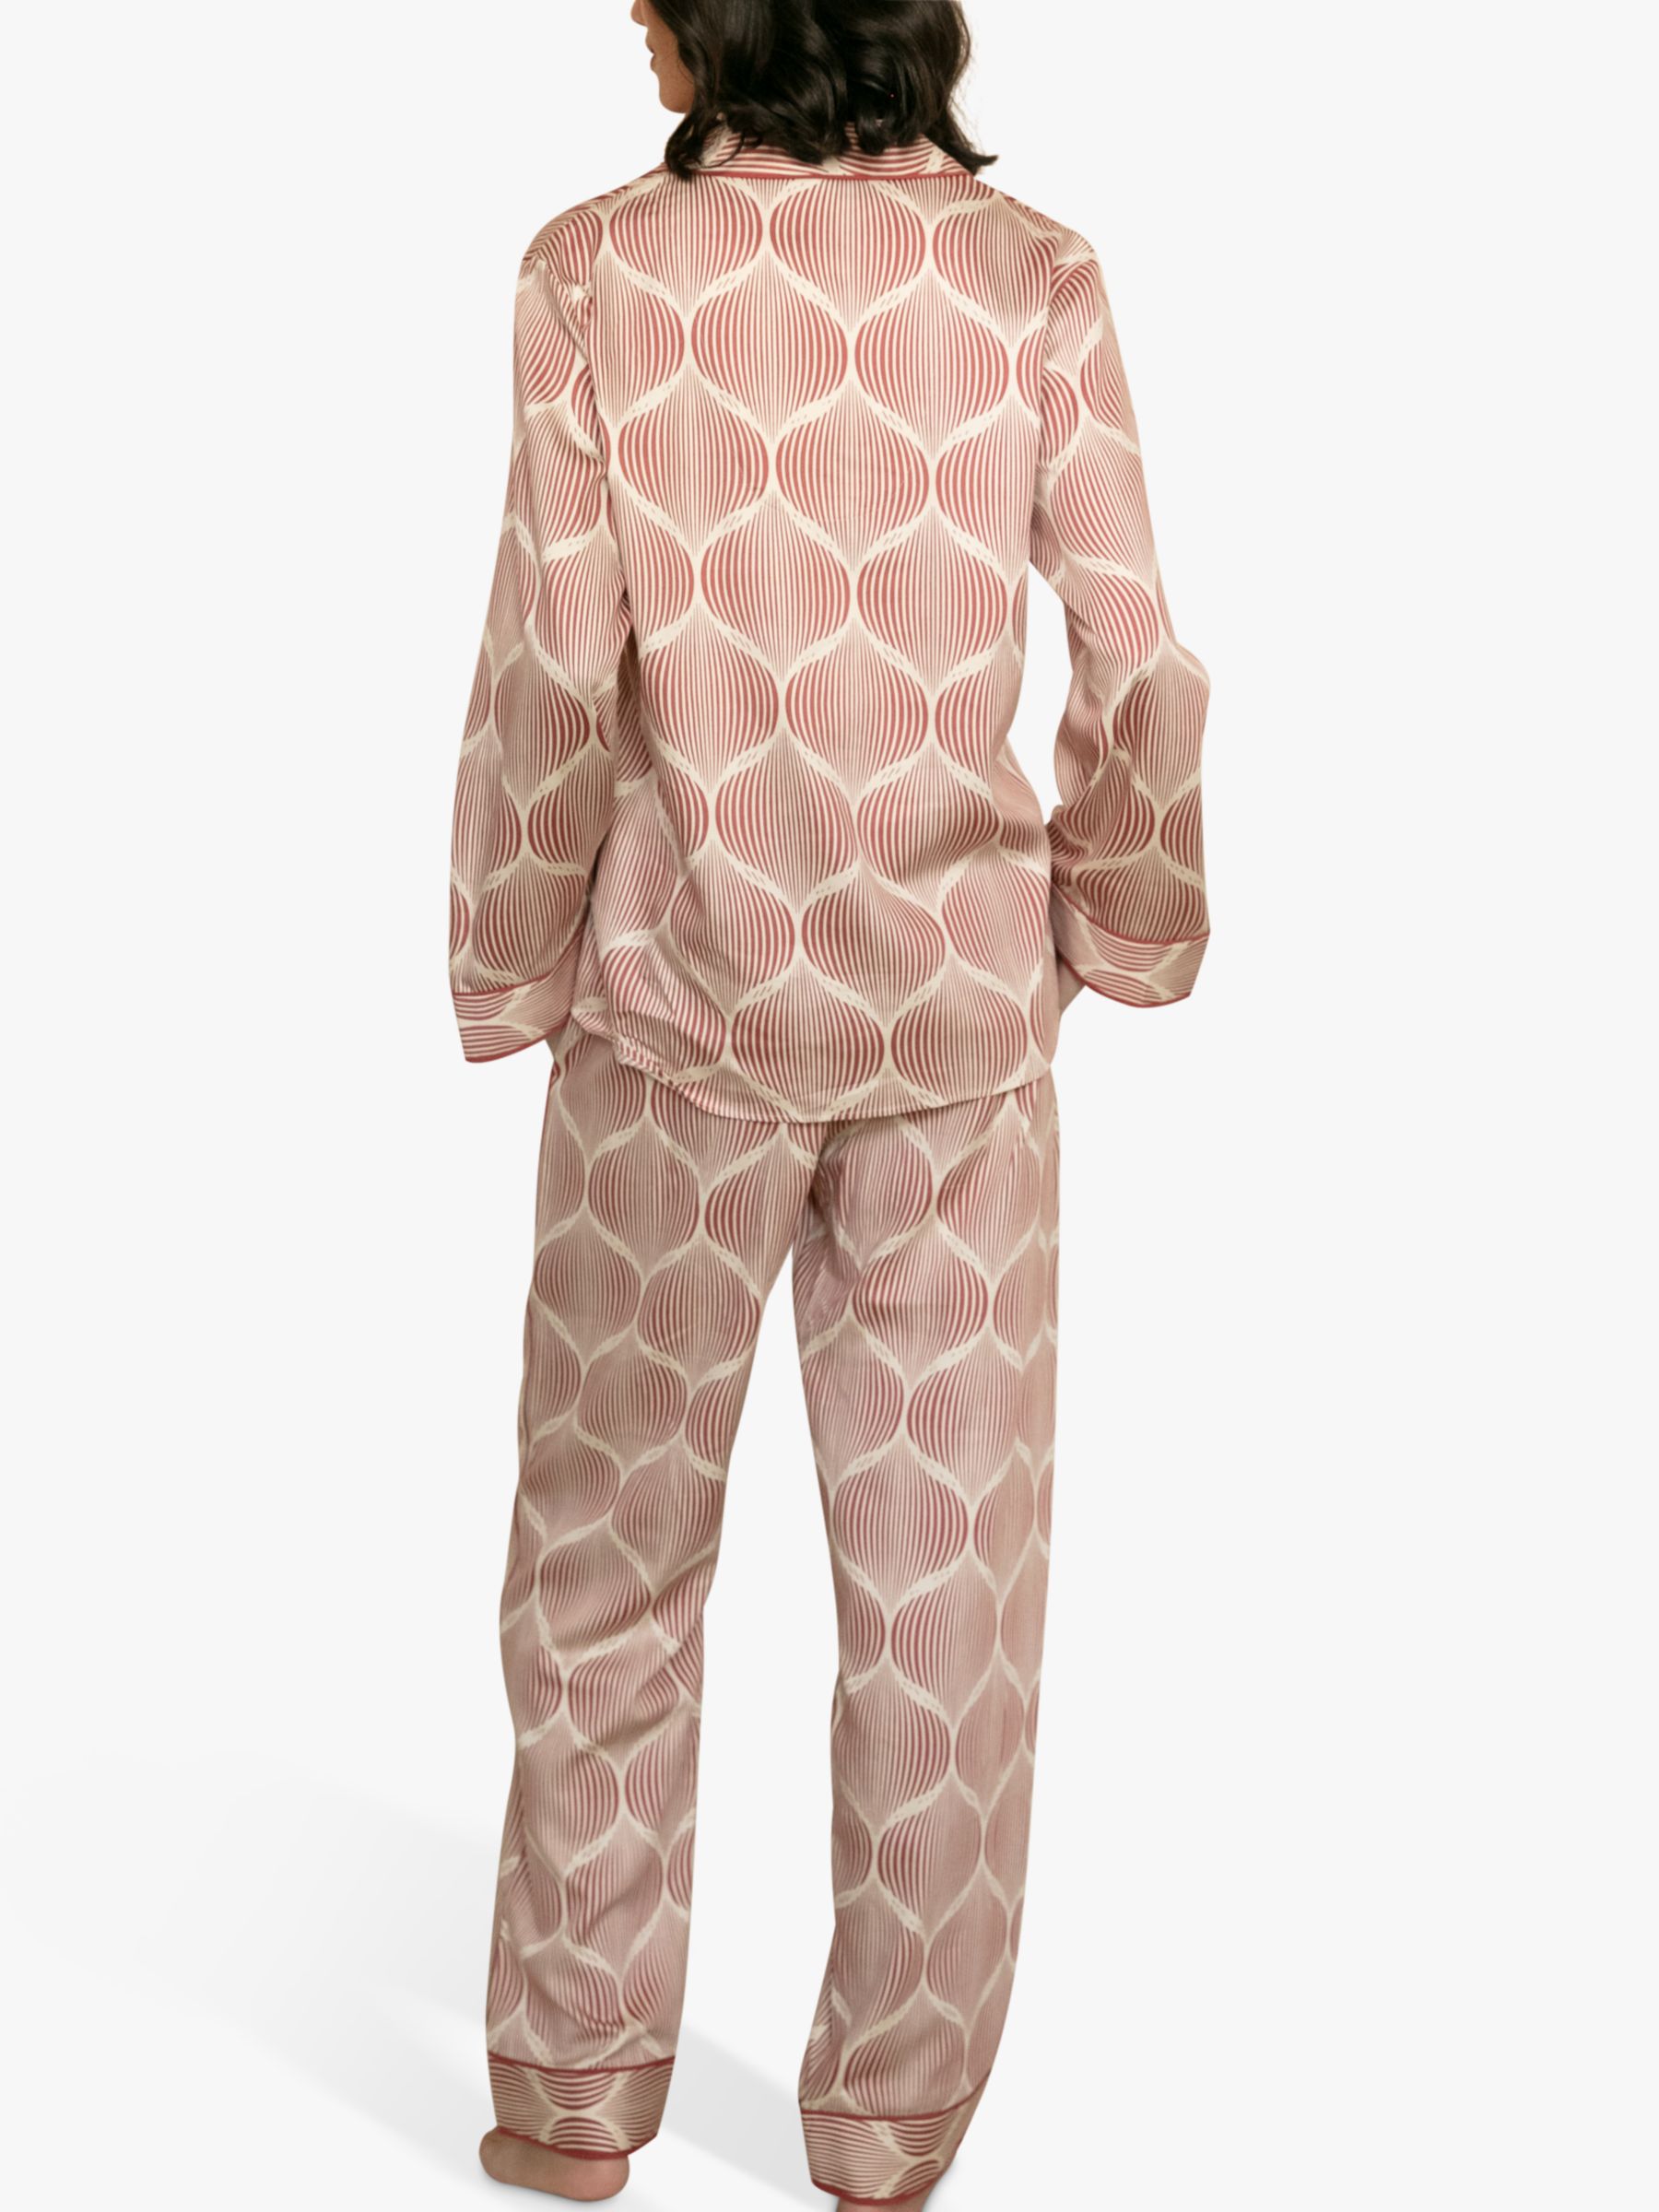 Buy Fable & Eve Islington Geometric Print Pyjamas, Burnt Orange Online at johnlewis.com